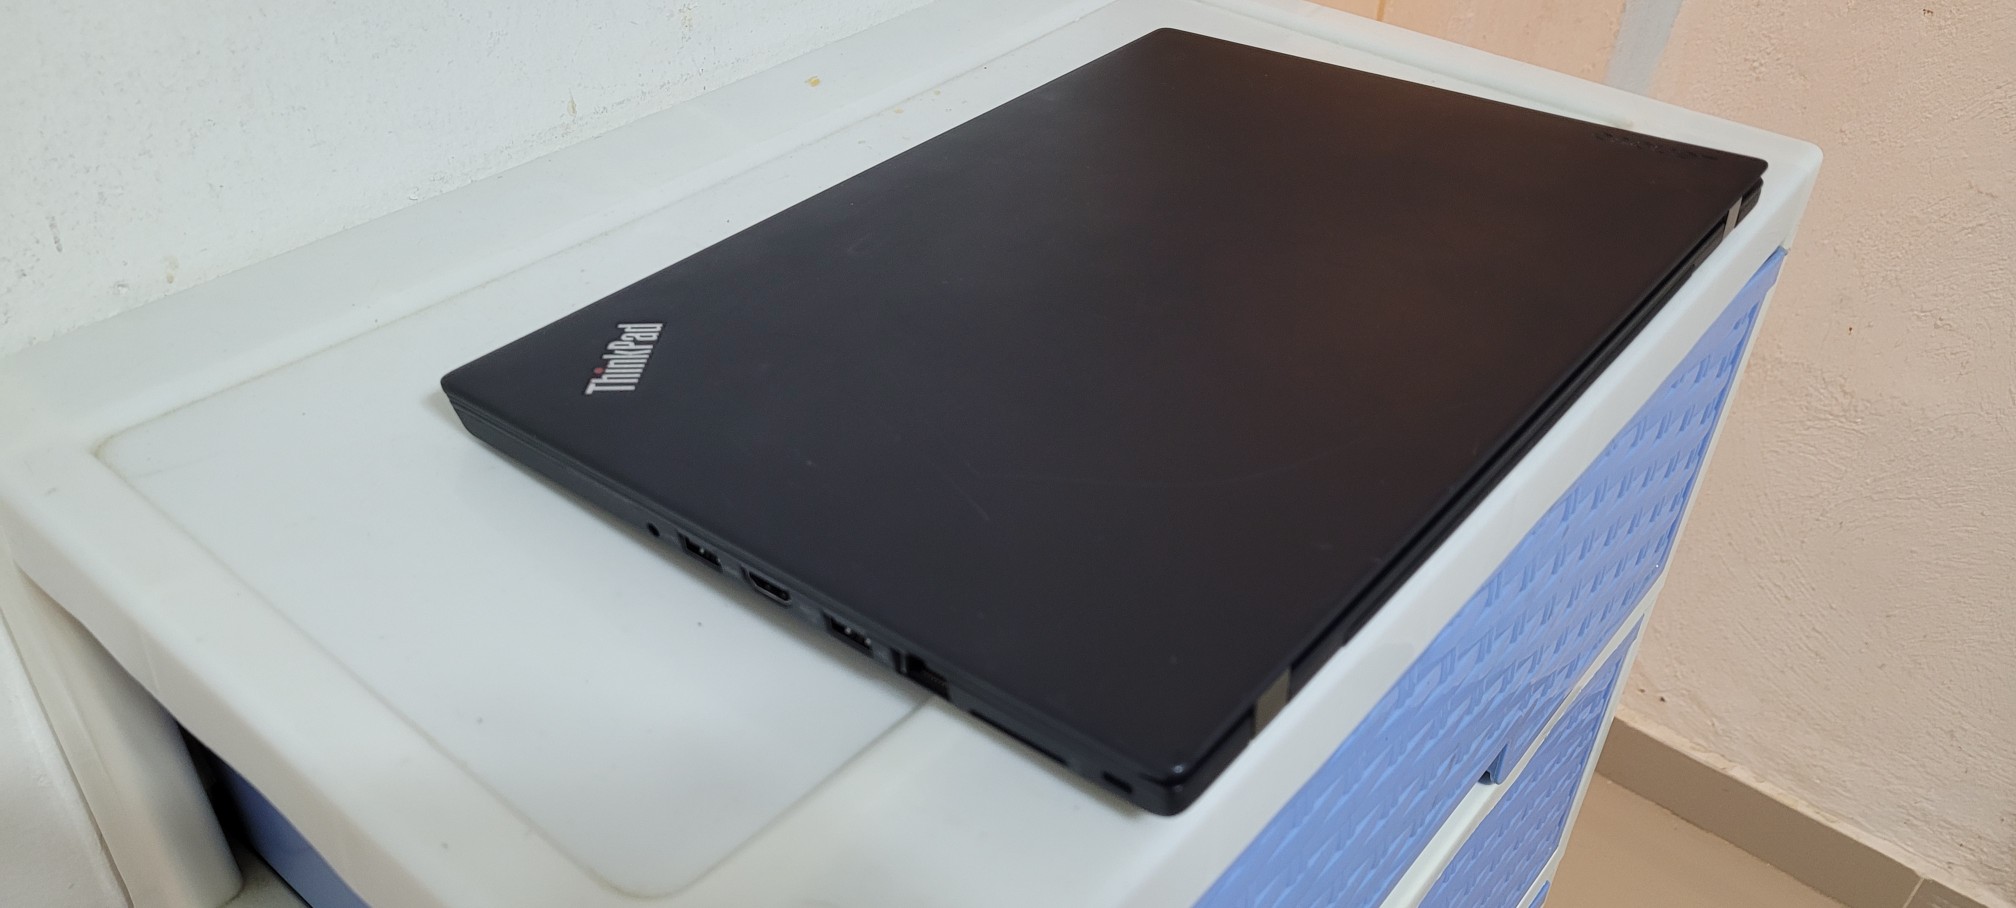 computadoras y laptops - Lenovo T470 14 Pulg Core i7 7ma Gen Ram 16gb Disco 256gb SSD Video 8gb 2